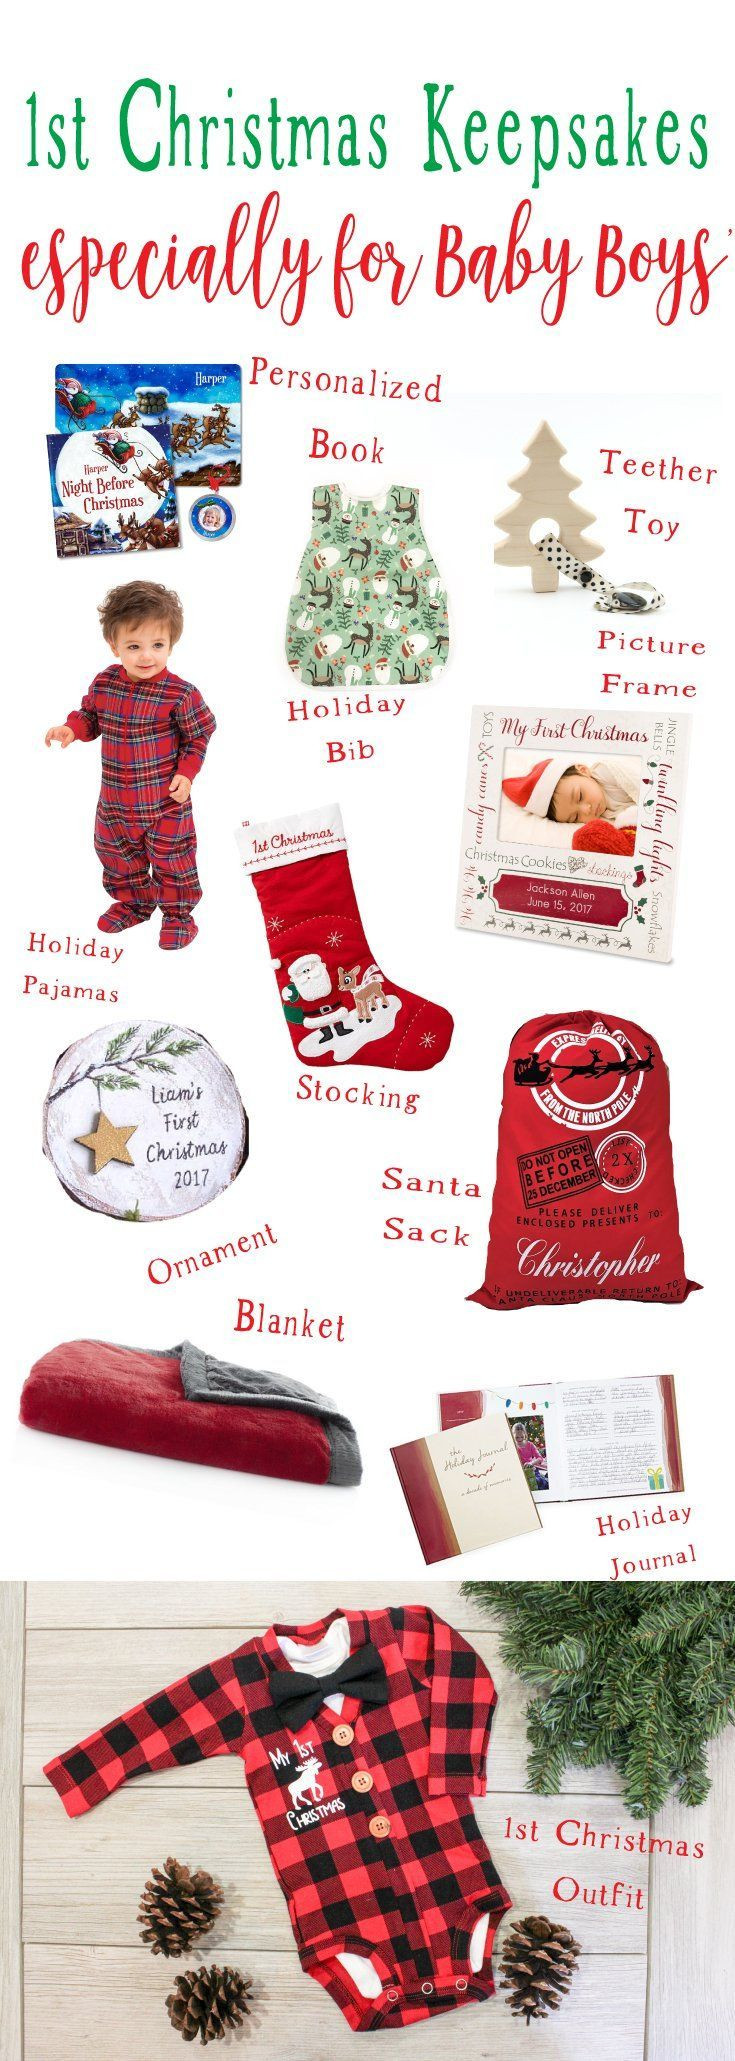 Christmas Gift Ideas For Newborn
 Baby Boy 1st Christmas Keepsake Ideas Christmas